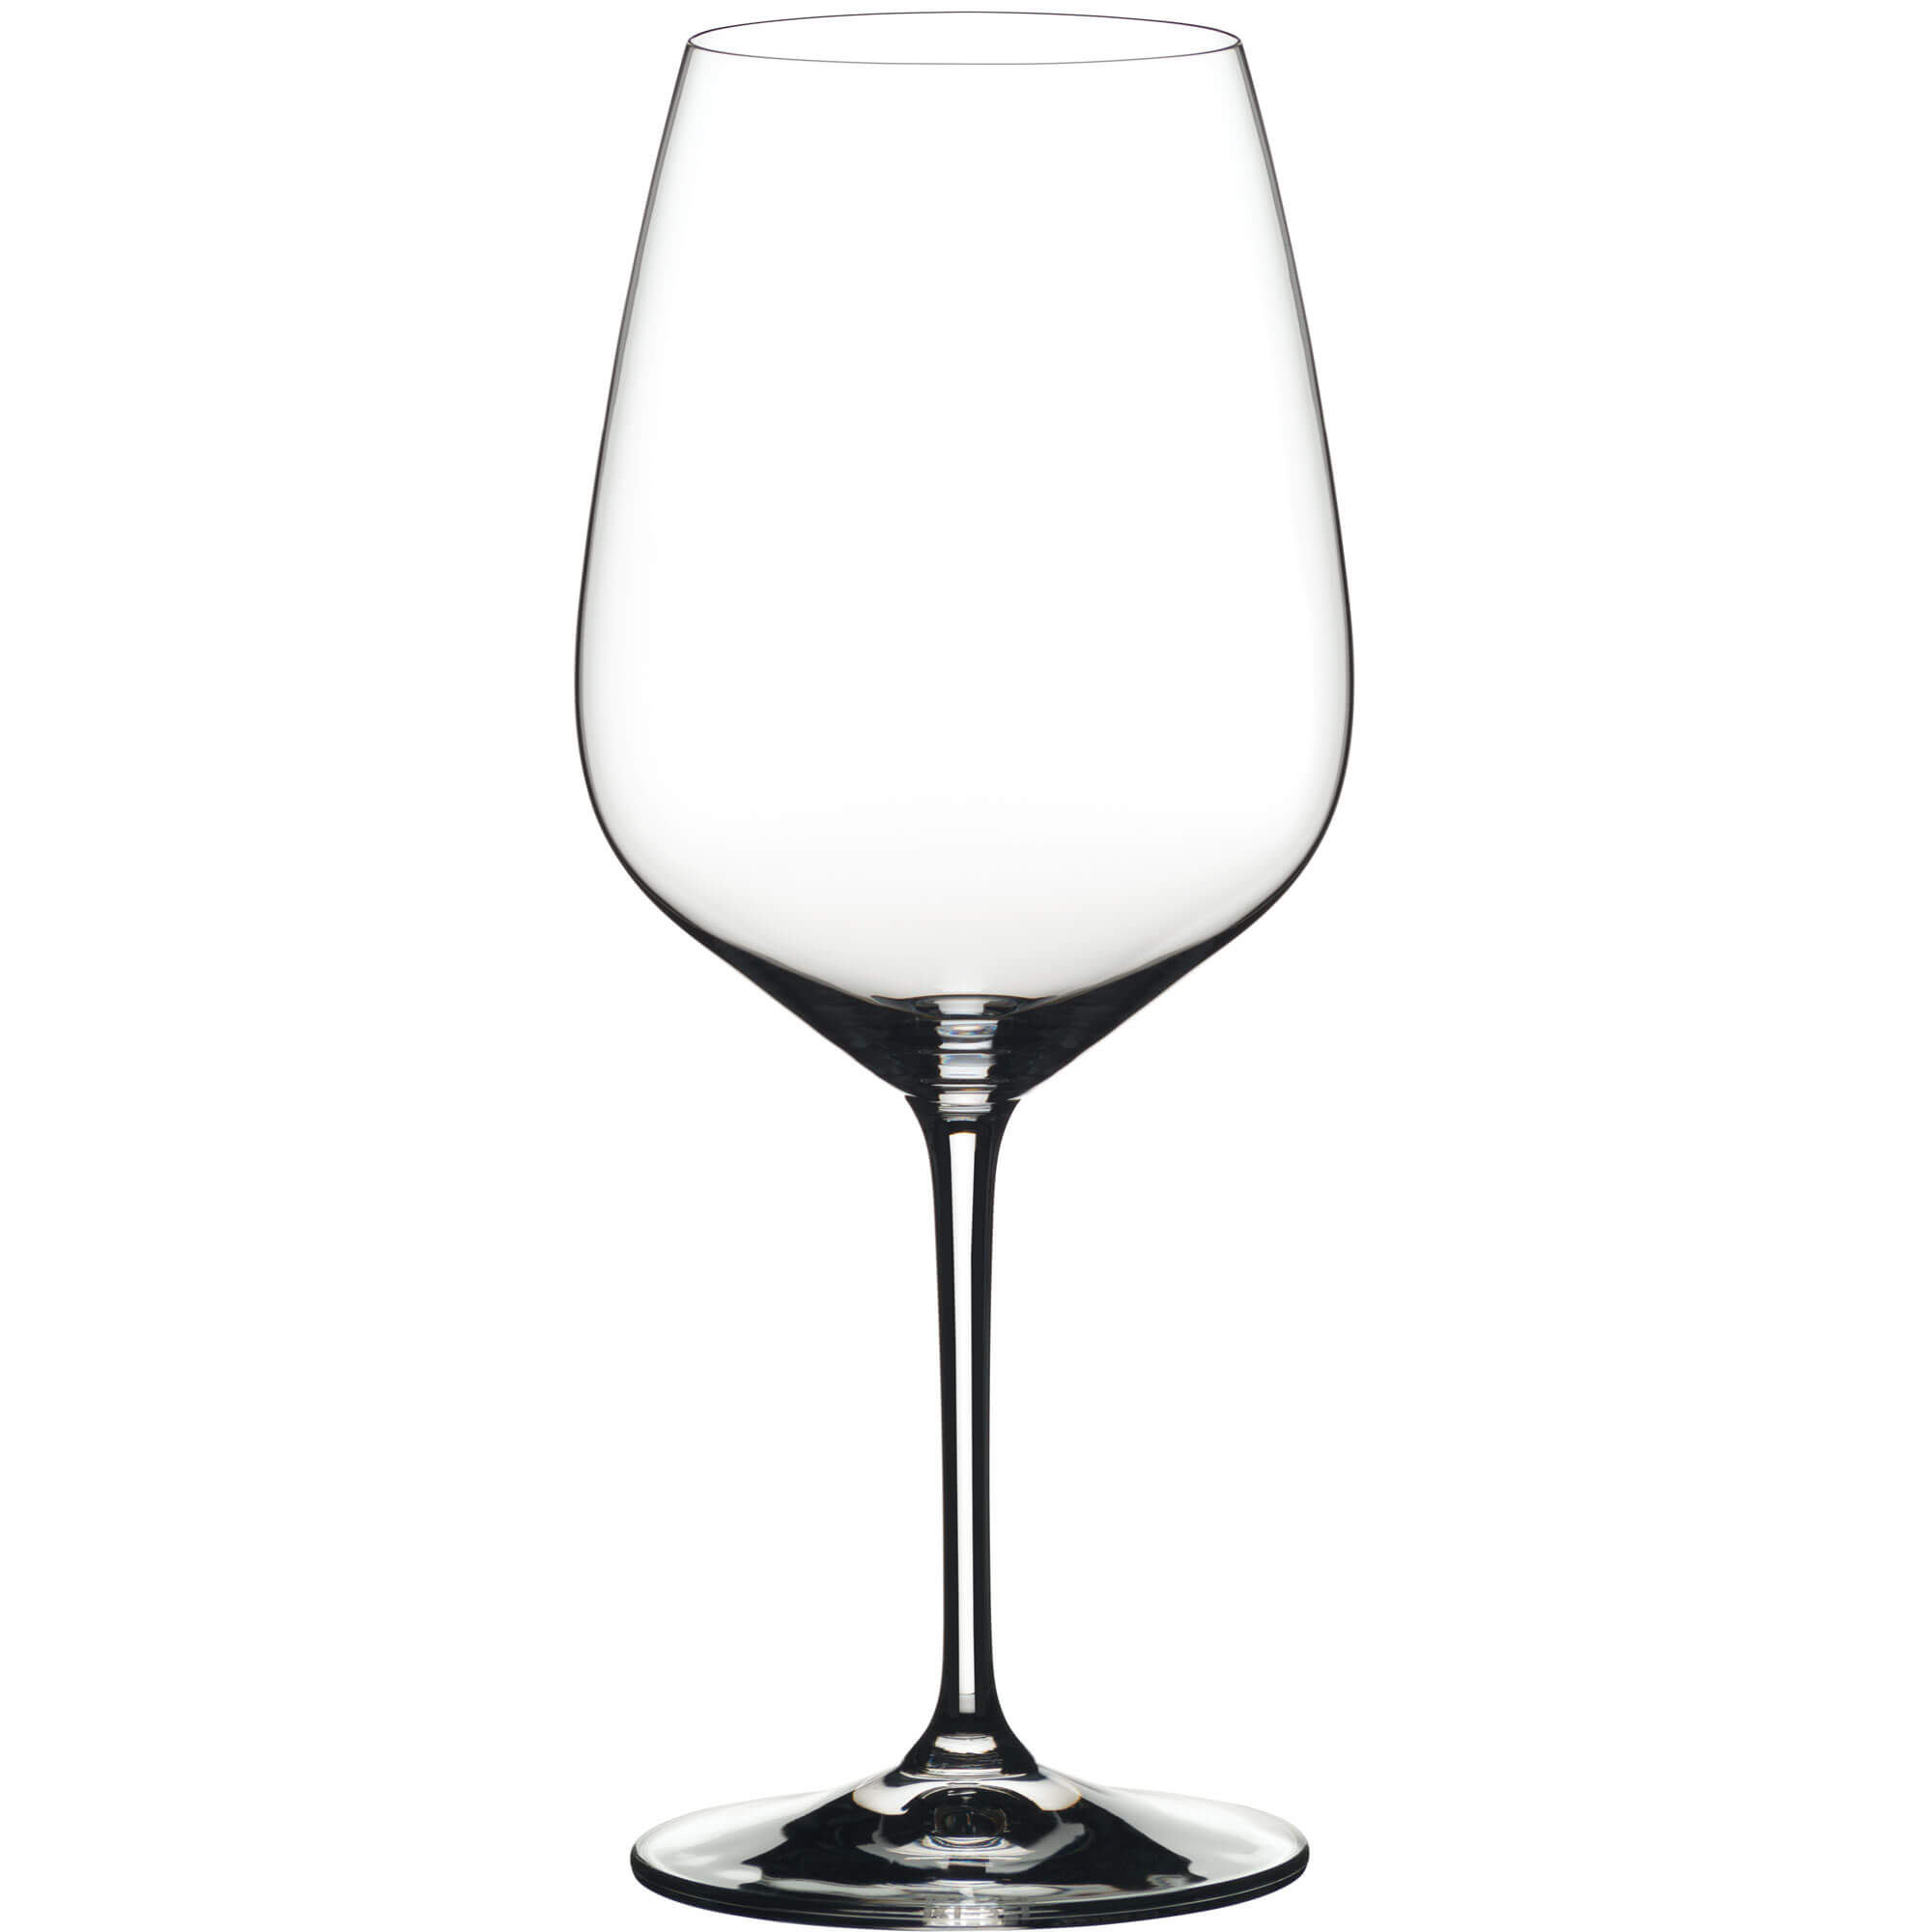 Cabernet glass Extreme, Riedel - 800ml (2 pcs.)